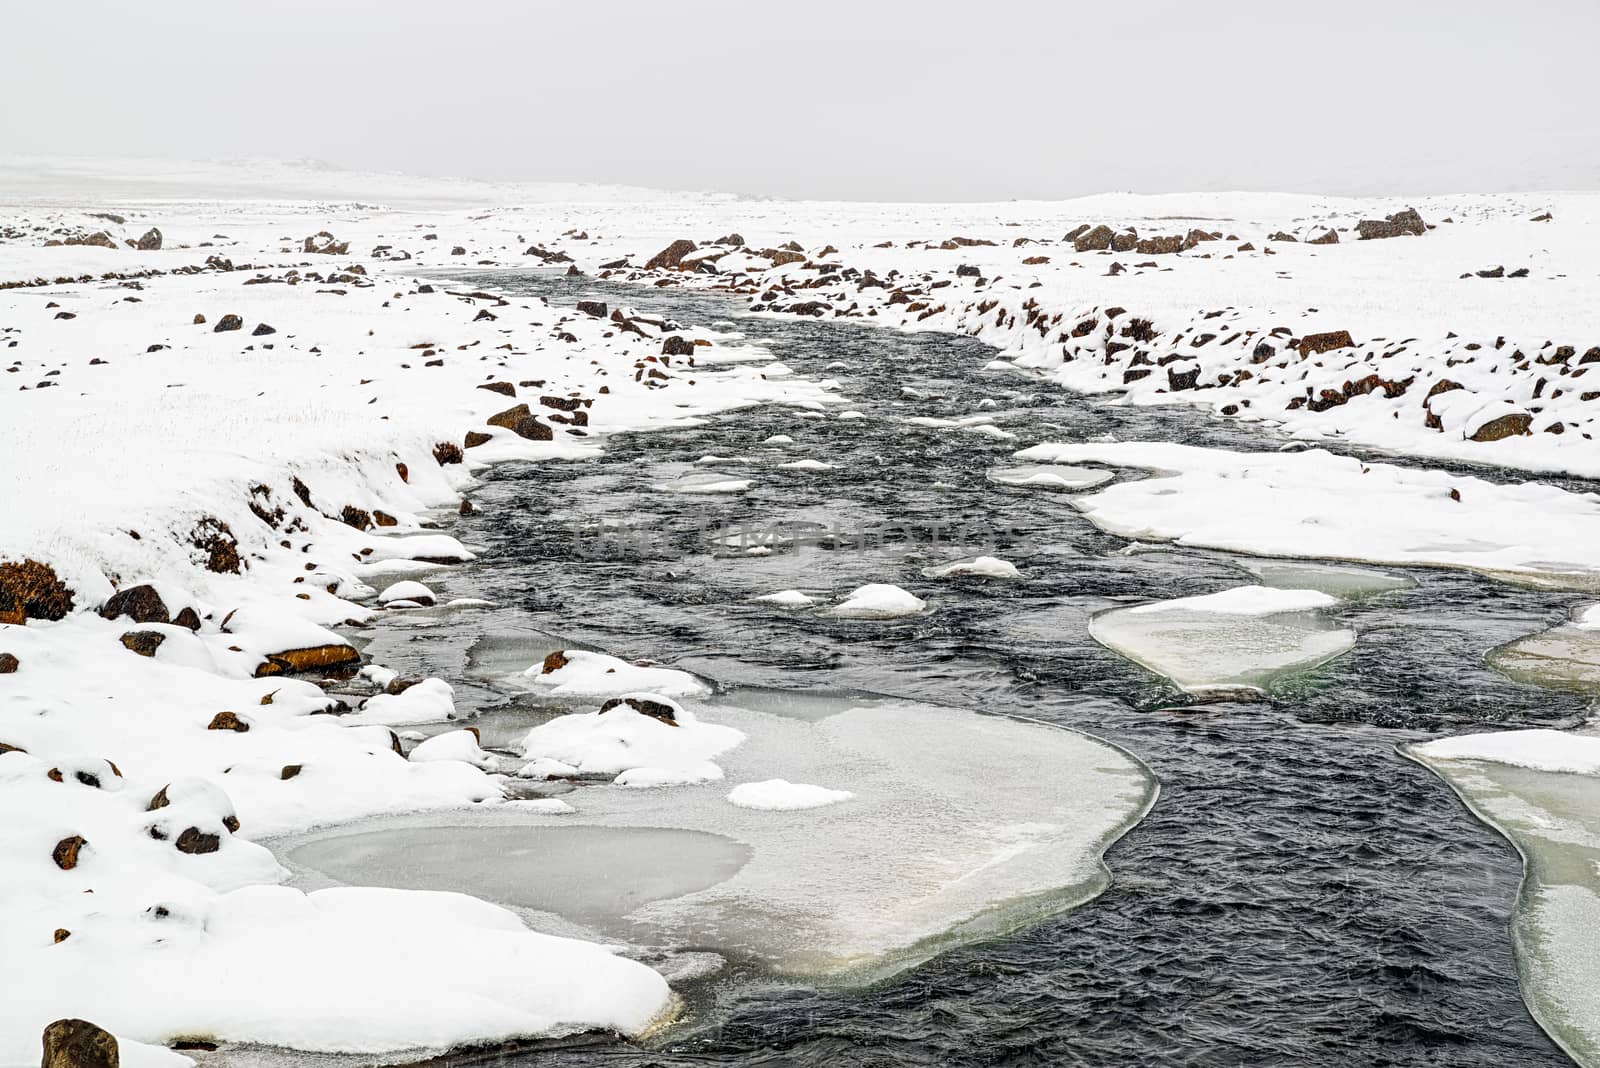 River before Snaedufoss waterfall, Iceland by LuigiMorbidelli